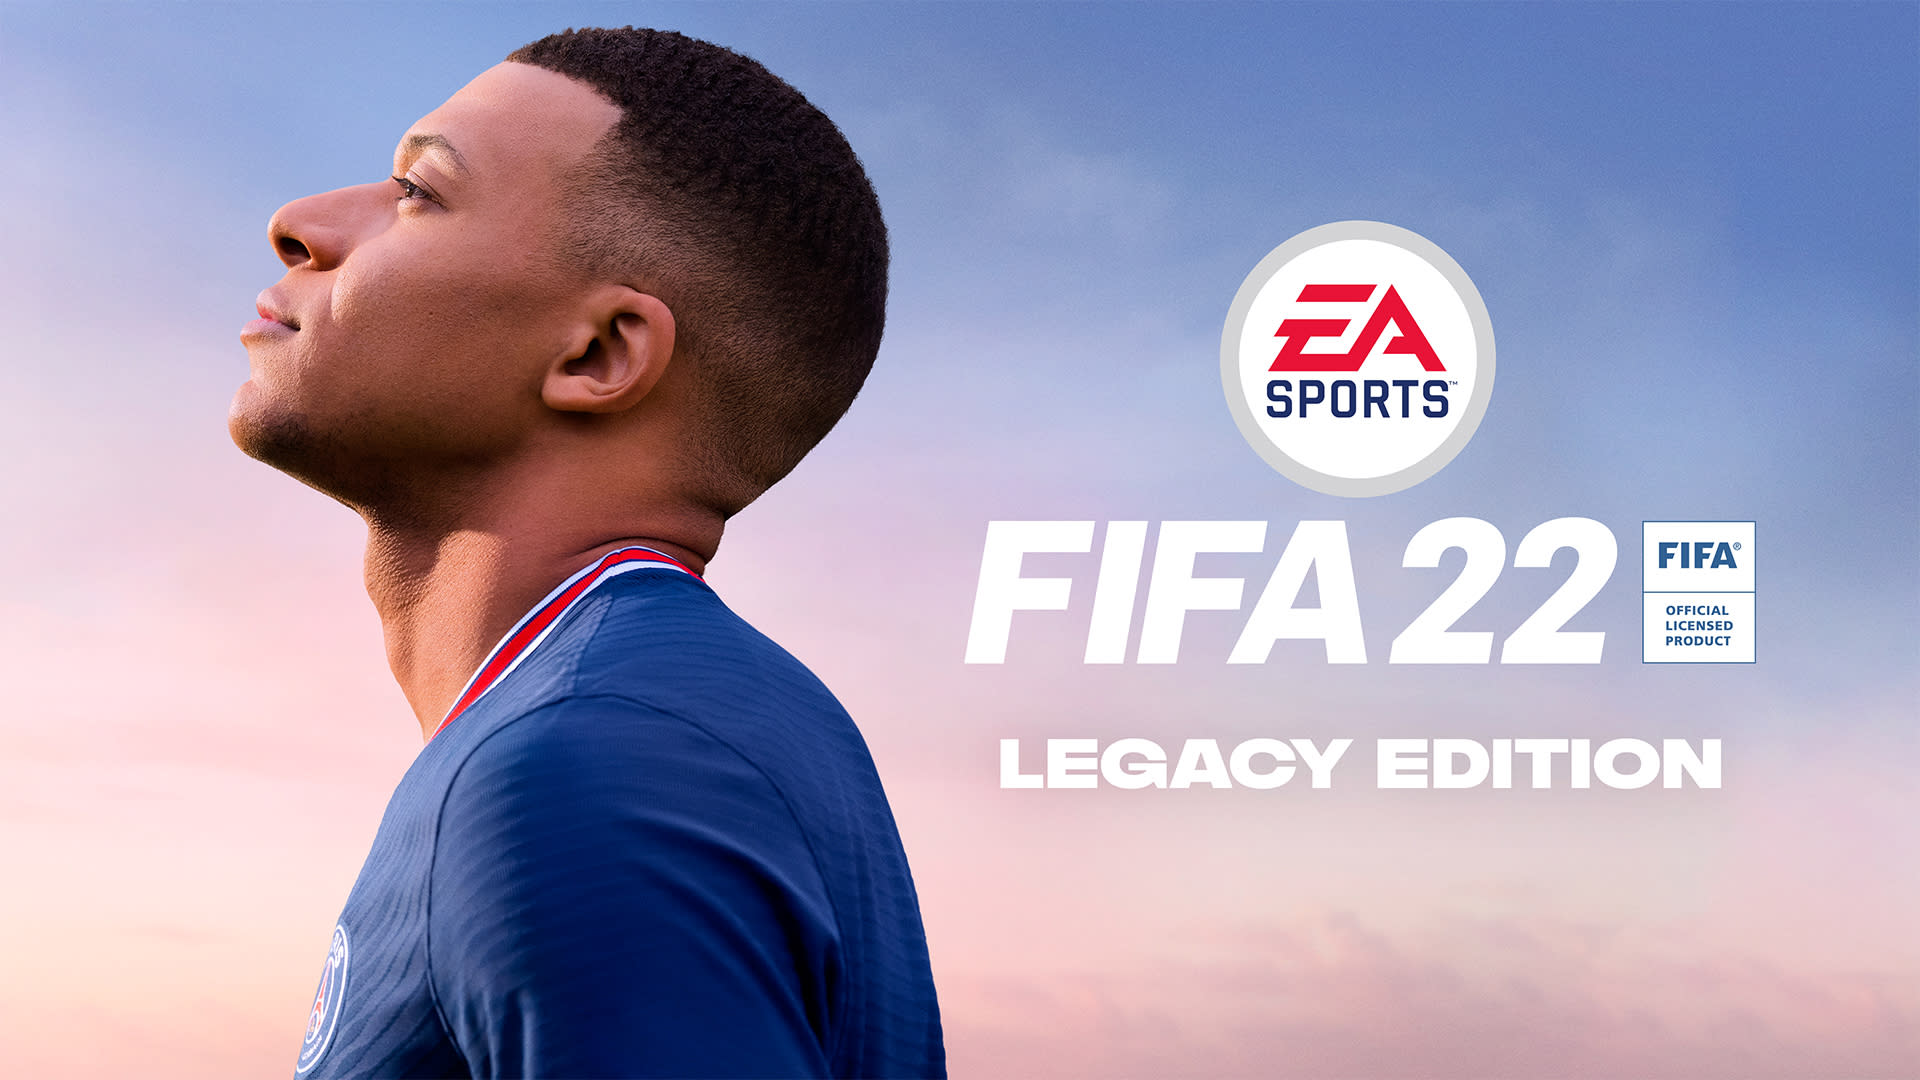 FIFA 22 Nintendo Switch™ Legacy Edition